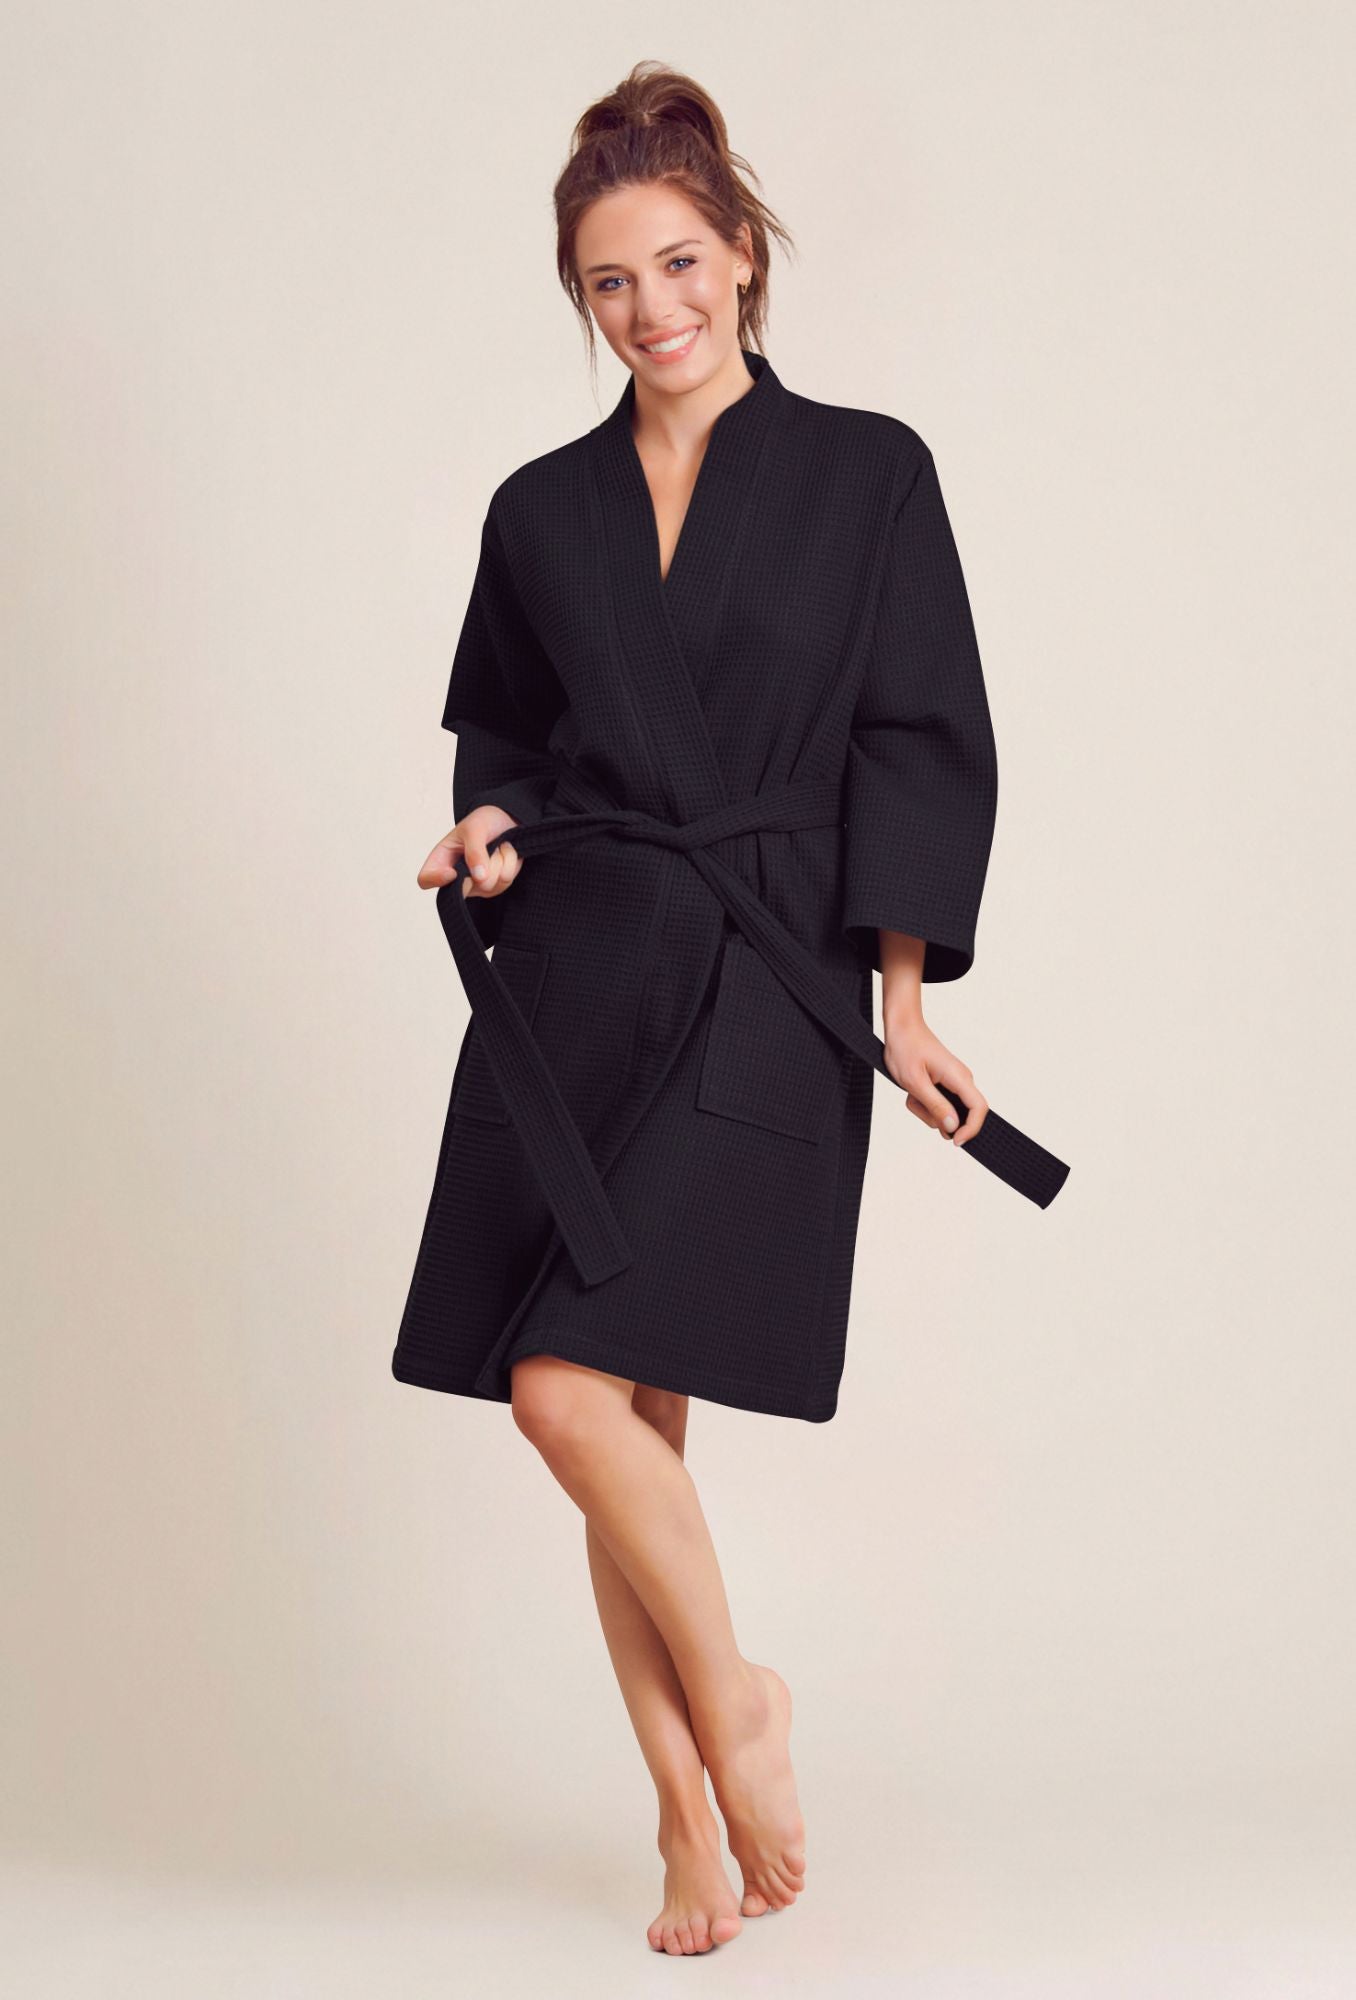 Luxury Bathrobes :: Plush Robes :: Super Soft Black Lightweight Plush Shawl  Short Women's Robe - Wholesale bathrobes, Spa robes, Kids robes, Cotton  robes, Spa Slippers, Wholesale Towels